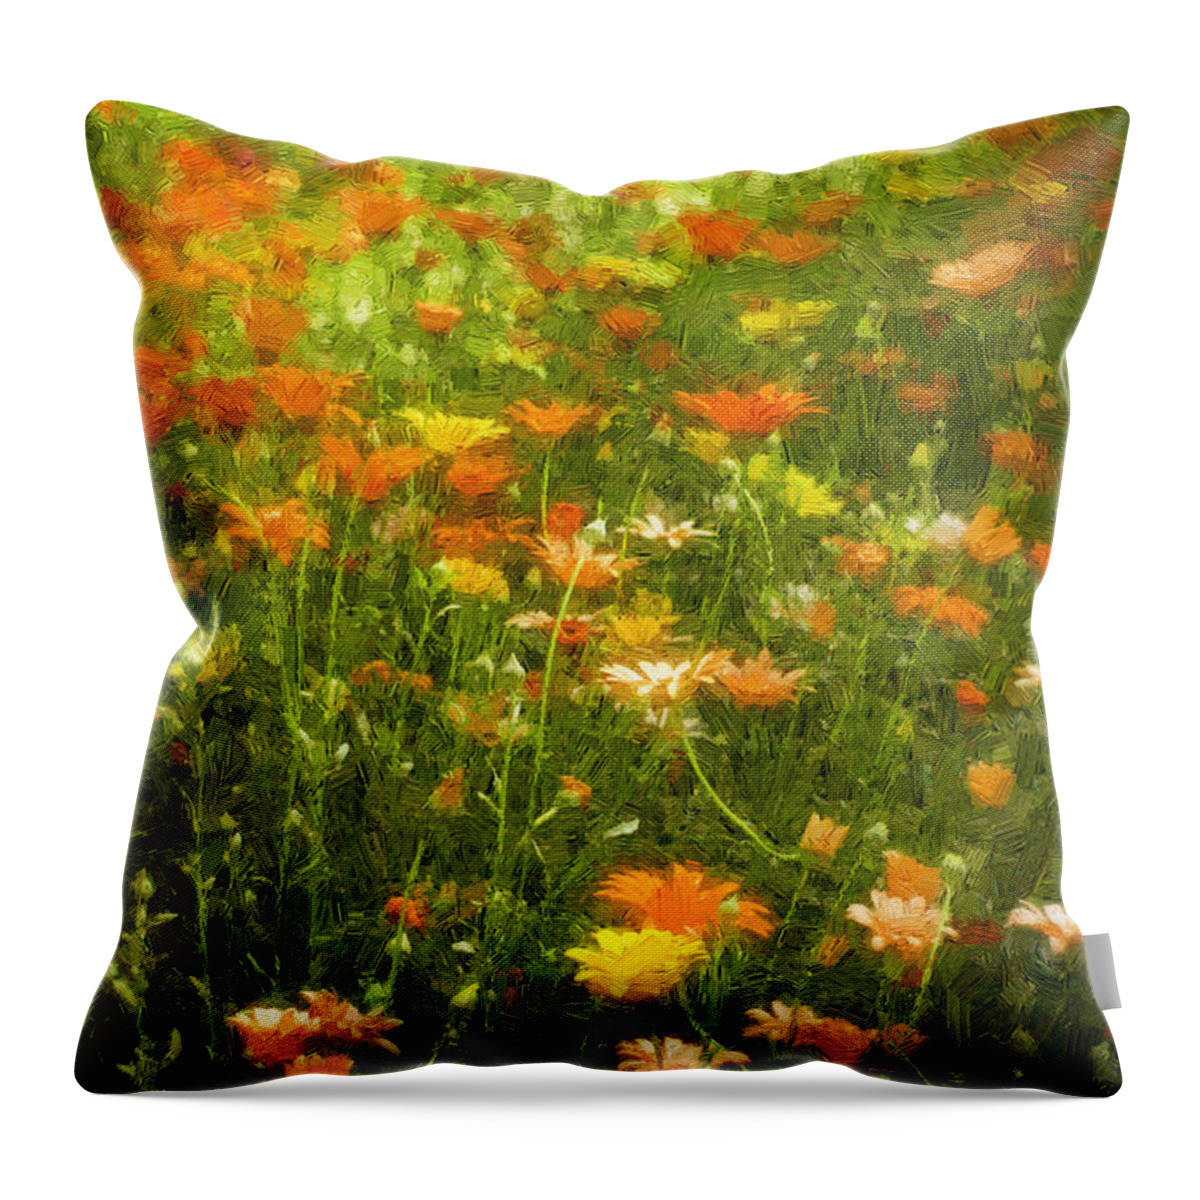 Flower Throw Pillow featuring the digital art Joy by Diane Dugas